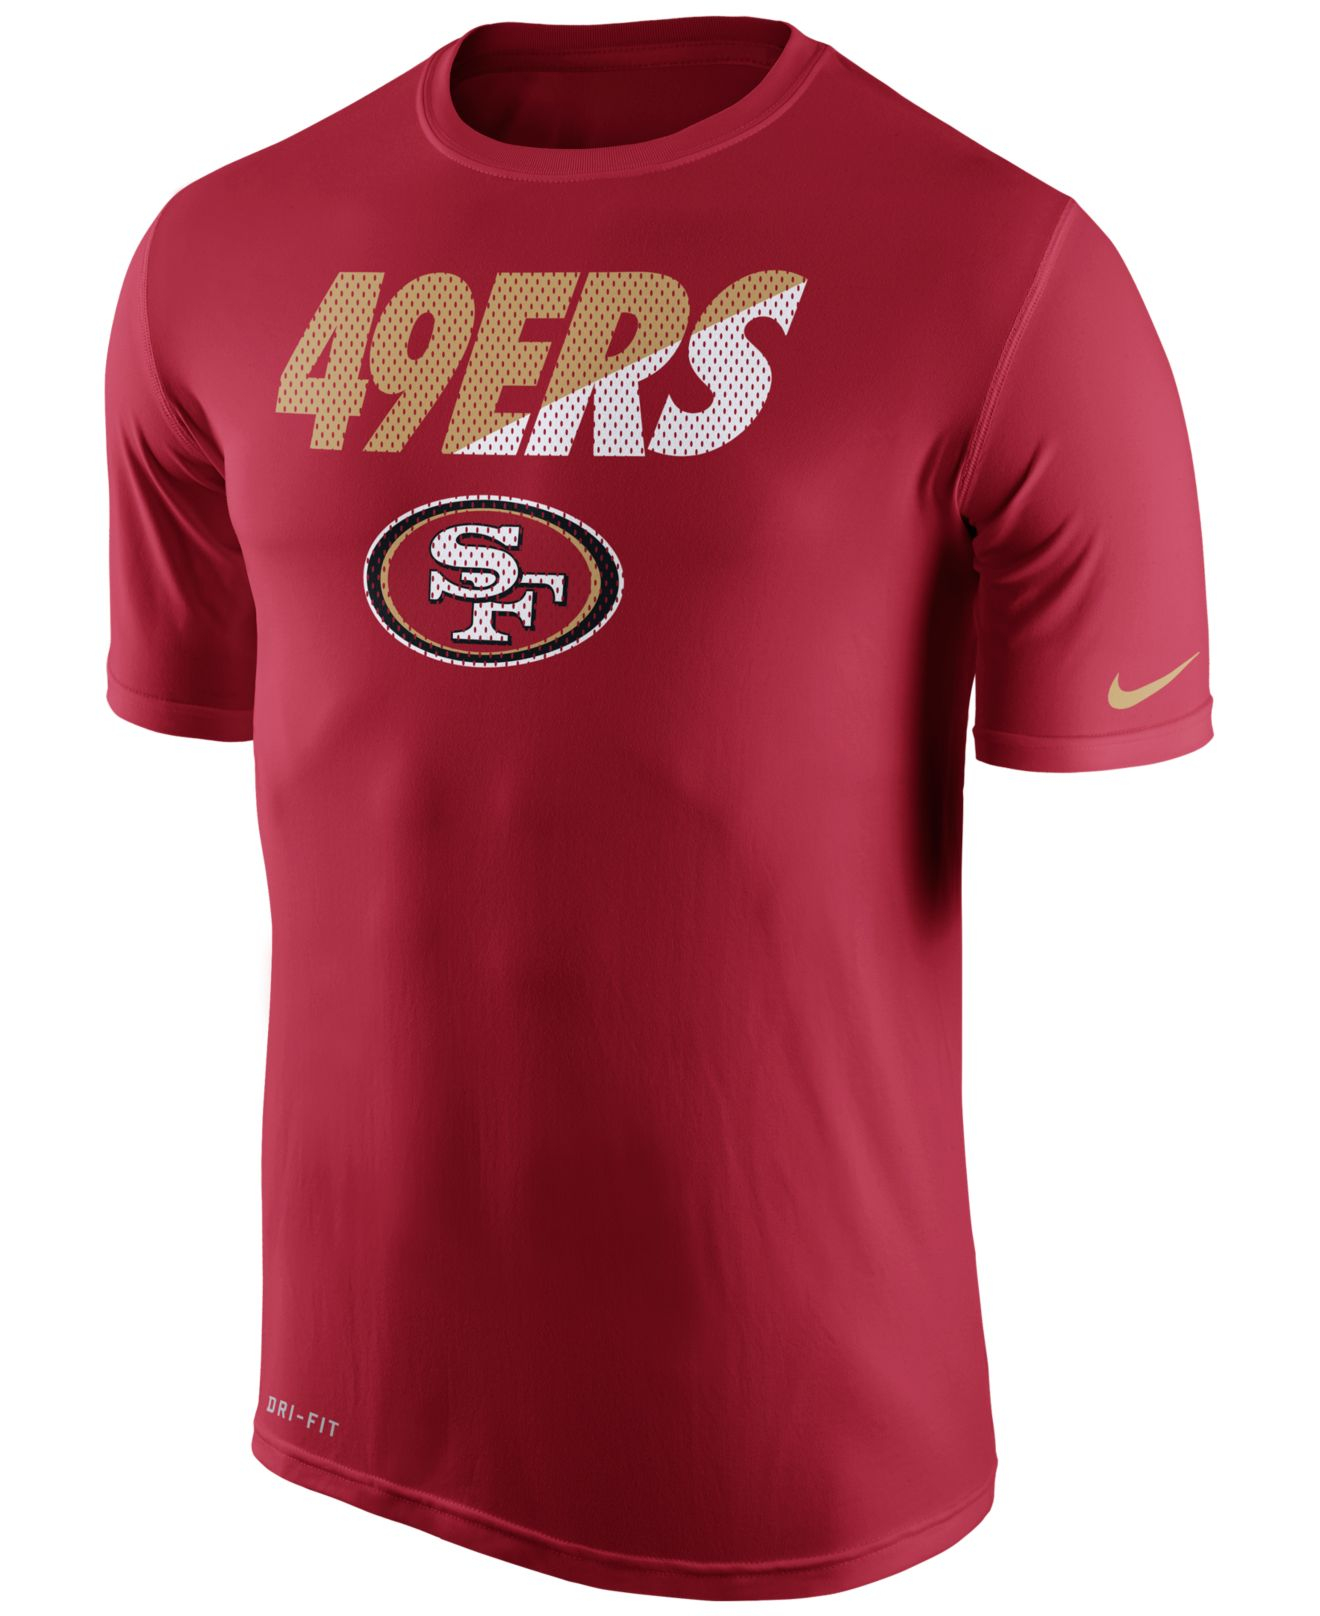 Lyst Nike Men's San Francisco 49ers Drifit Practice Tshirt in Red